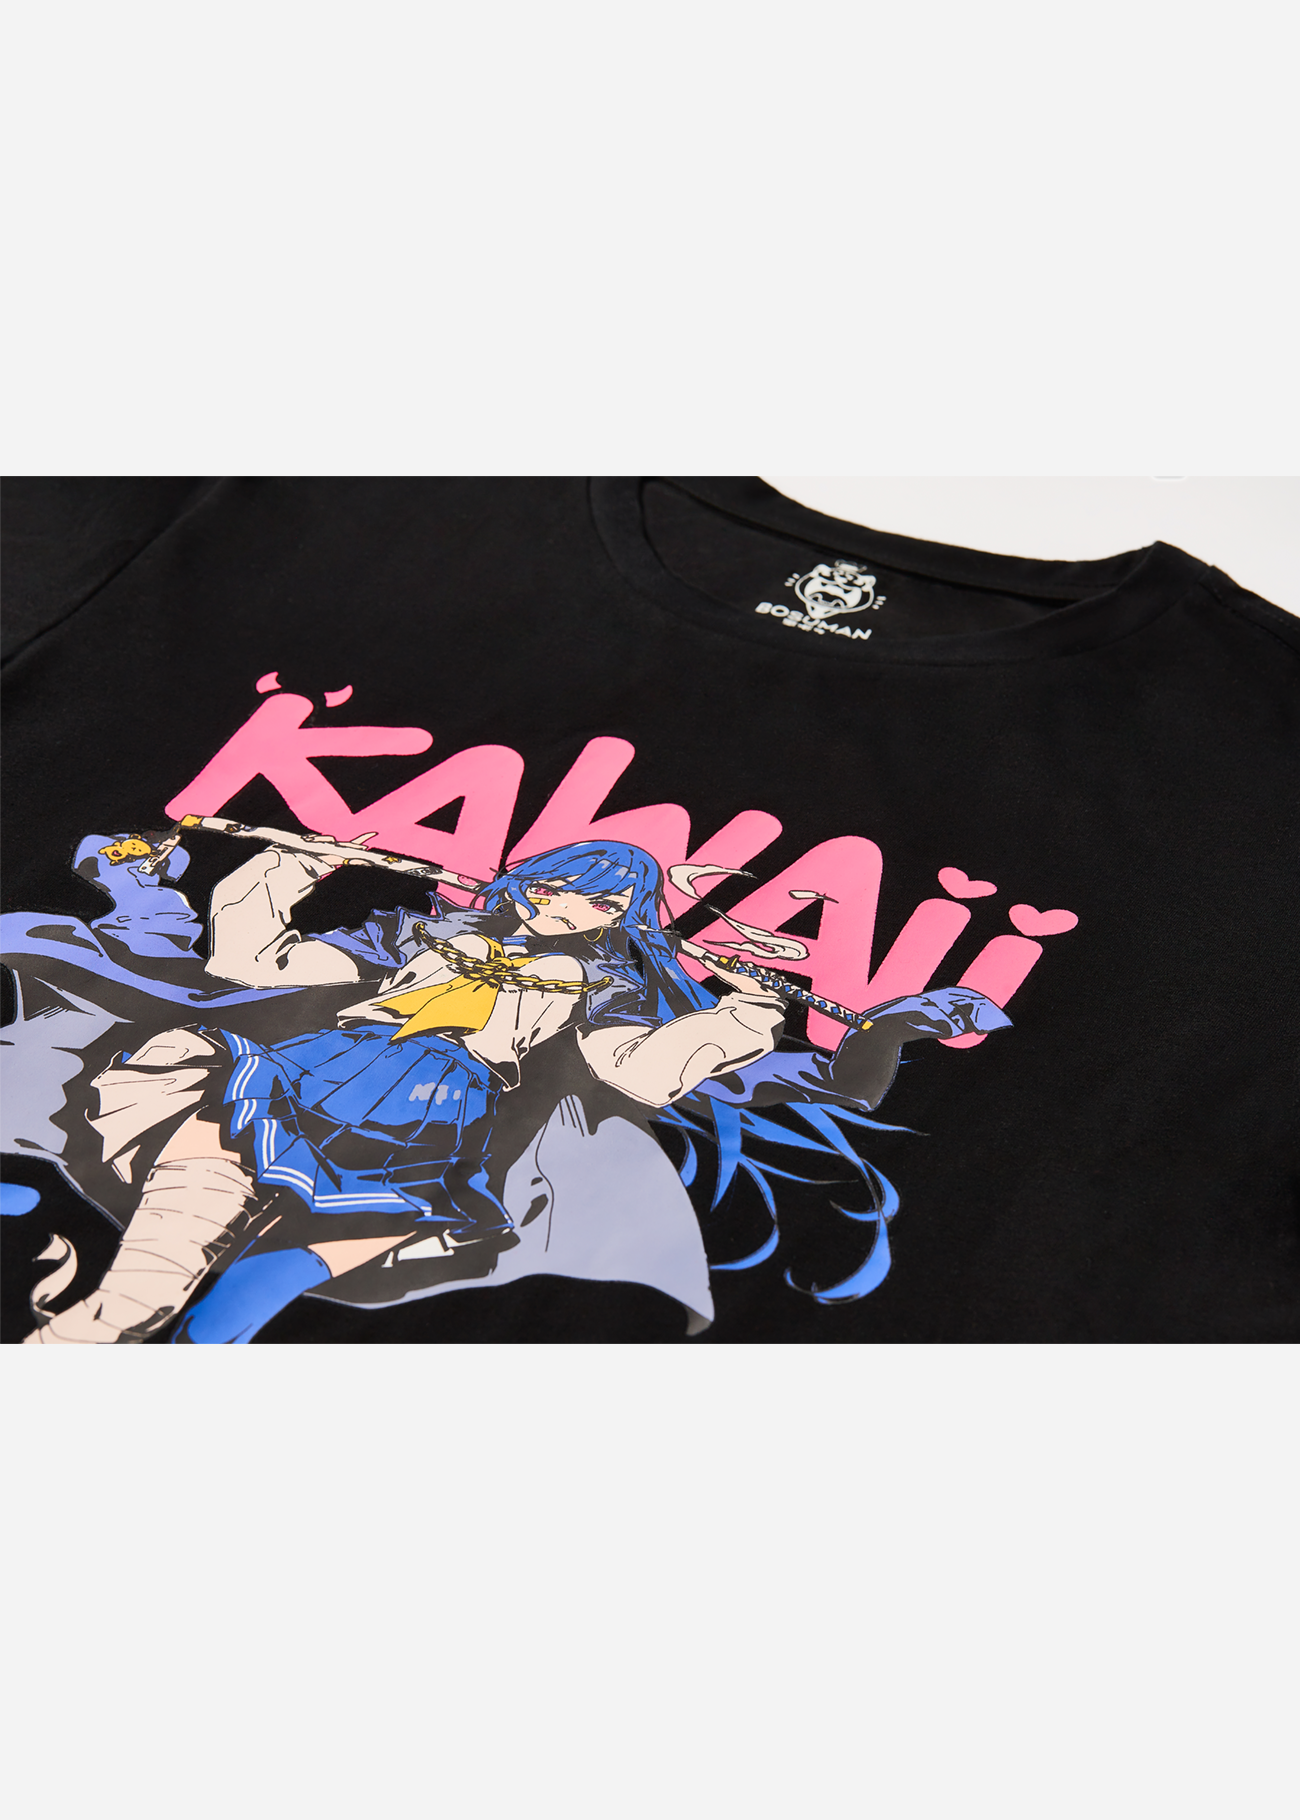 A front facing photo of the kawaii as f*ck waifu anime shirt